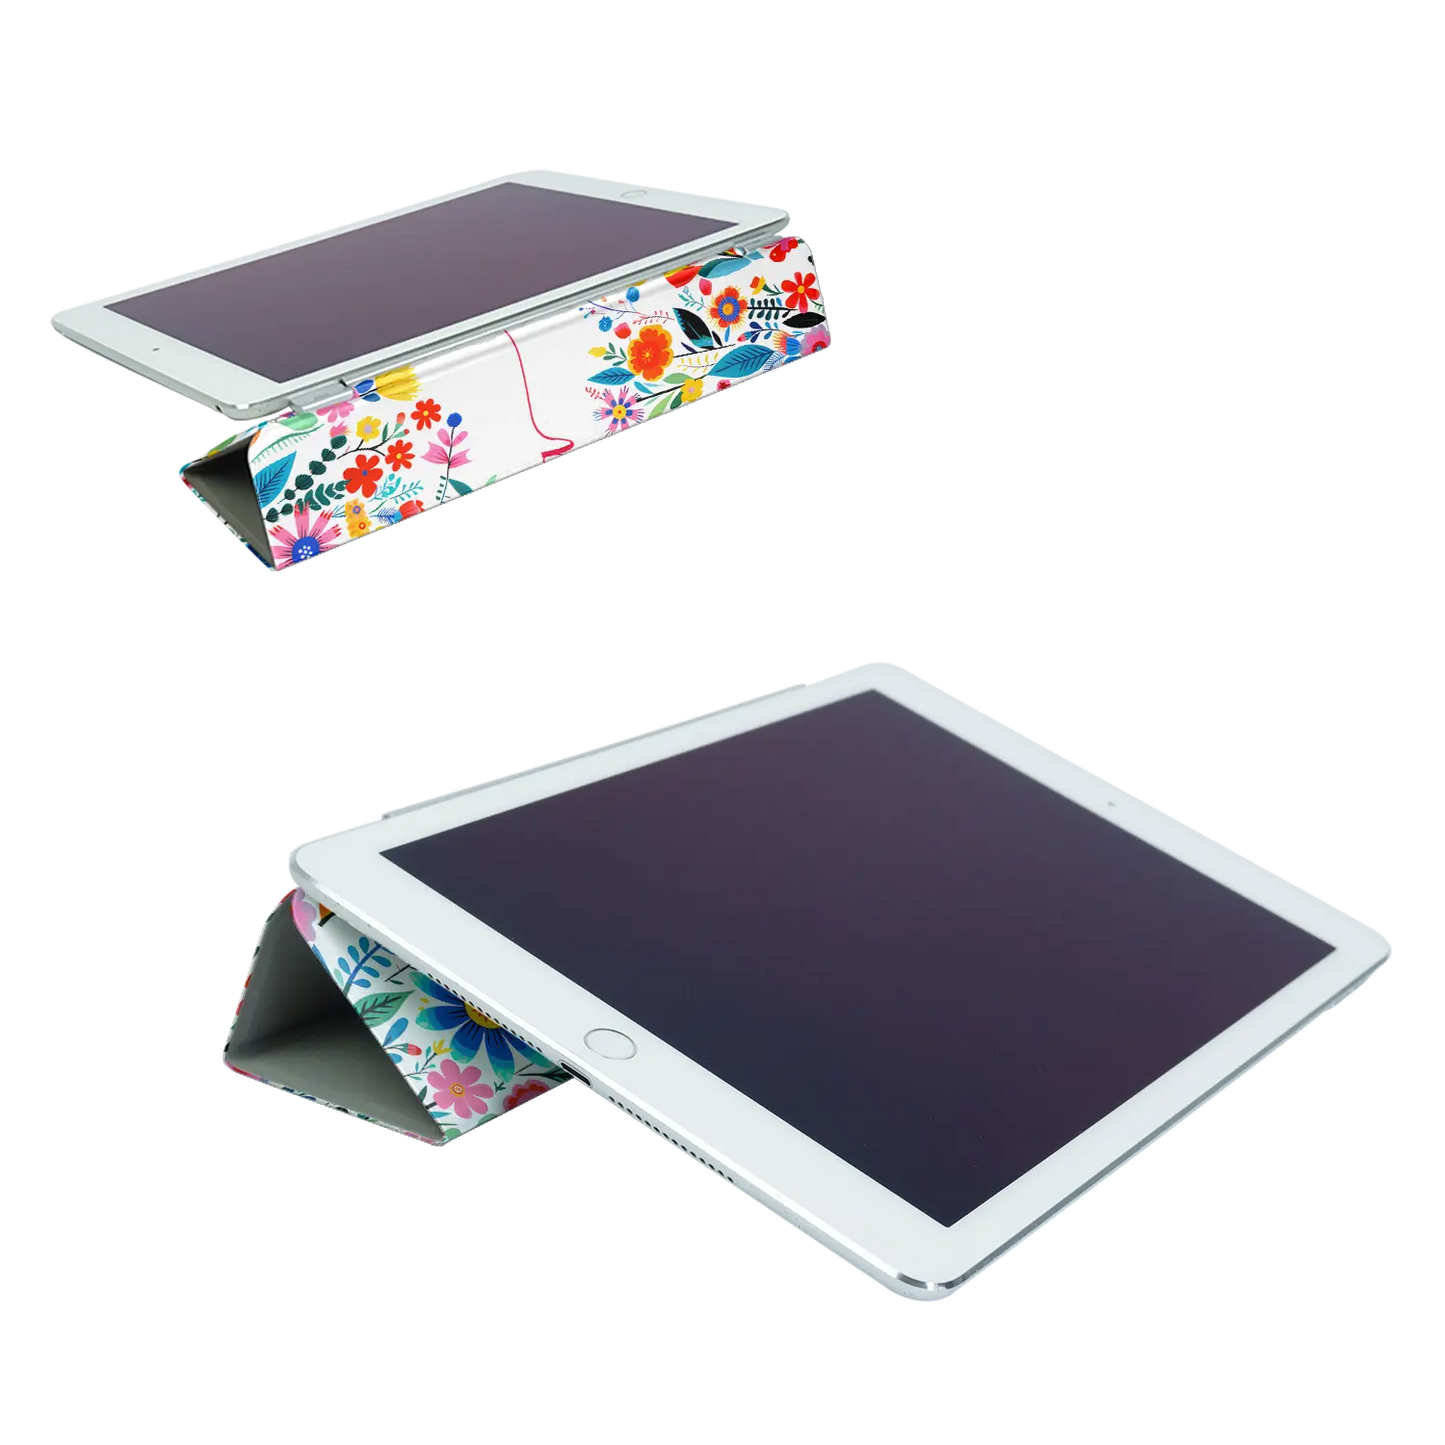 Happy Flowers - Personalised iPad case